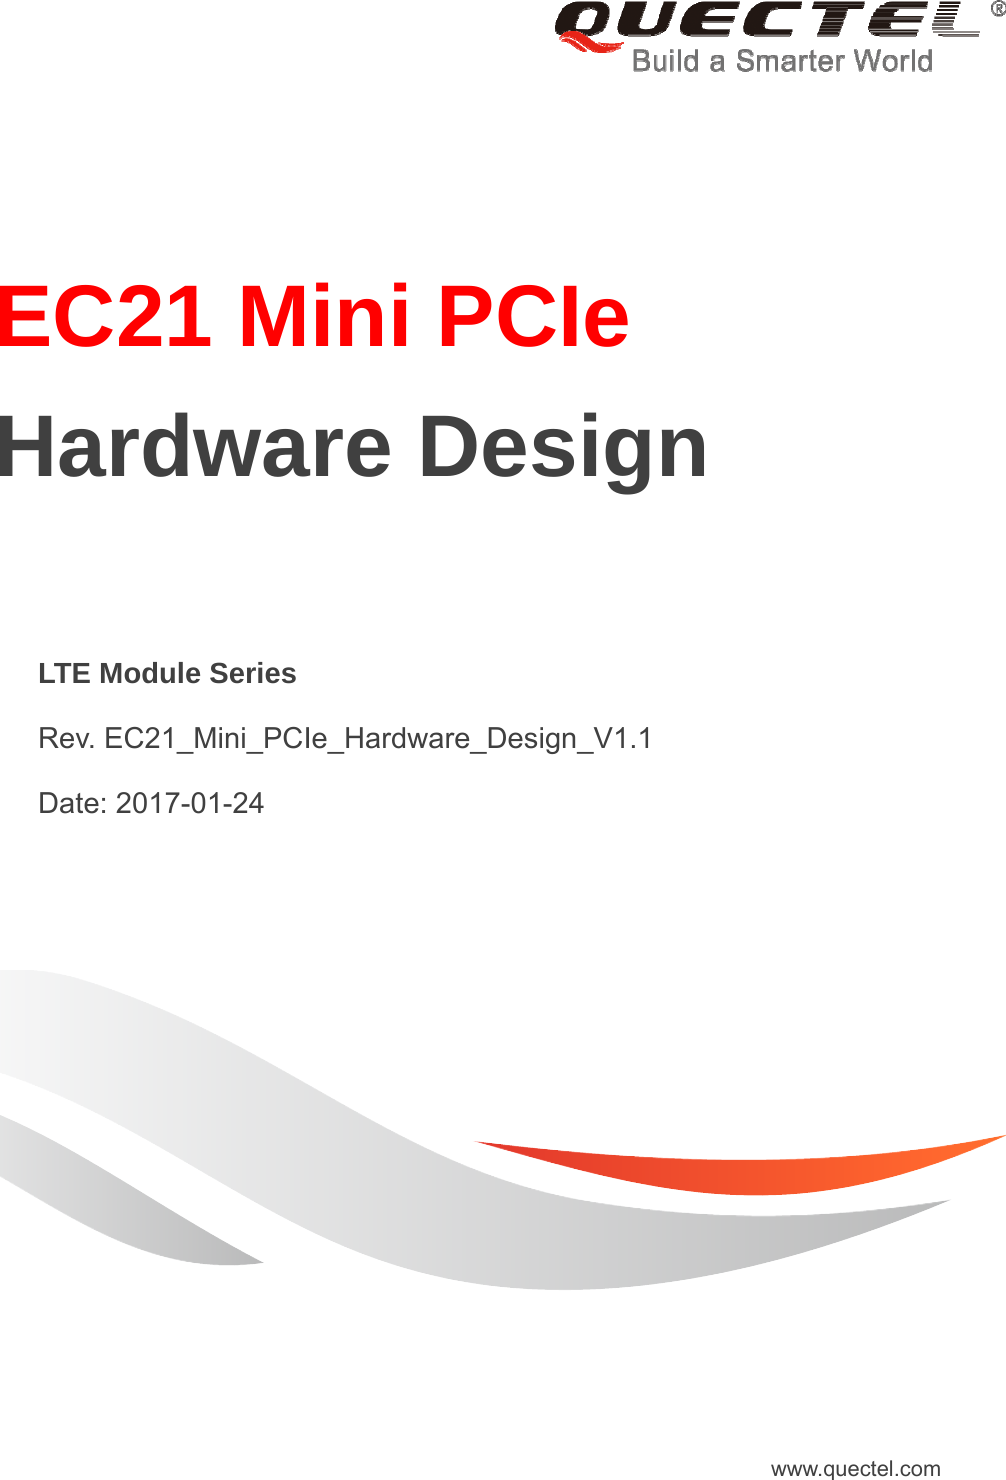     EC21 Mini PCIe  Hardware Design  LTE Module Series  Rev. EC21_Mini_PCIe_Hardware_Design_V1.1  Date: 2017-01-24 www.quectel.com